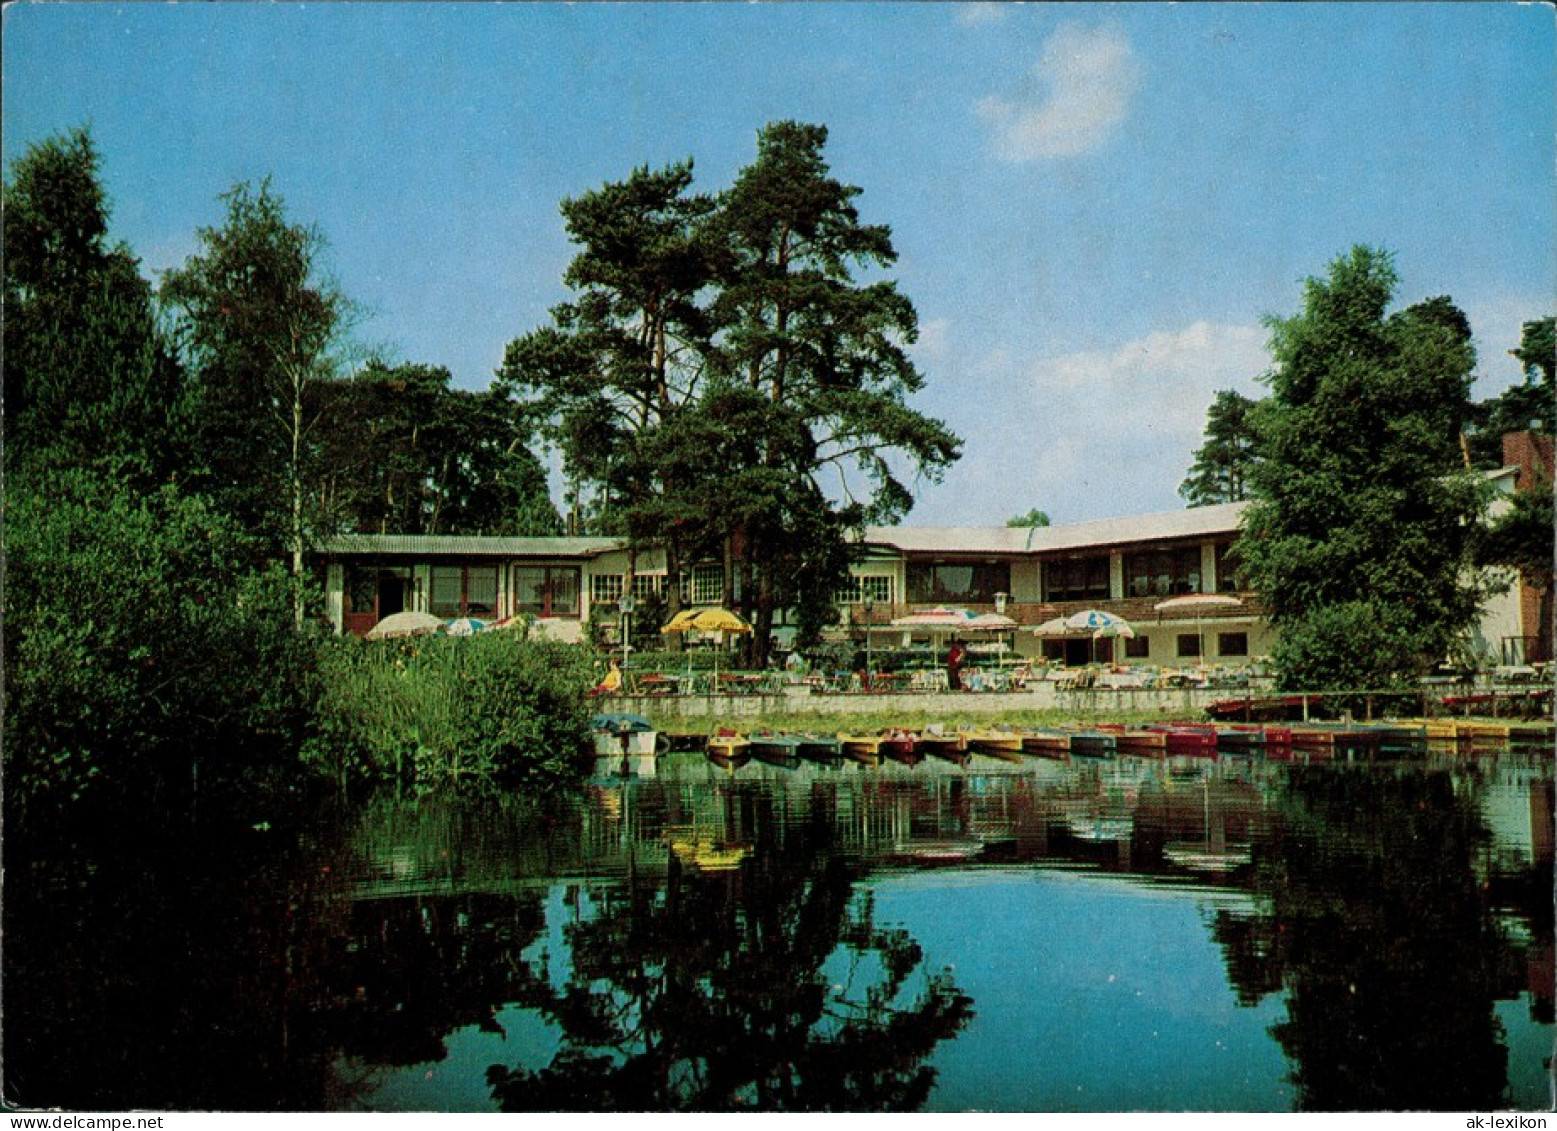 Ansichtskarte Gifhorn Restaurant "AM HEIDESEE" 1977 - Gifhorn